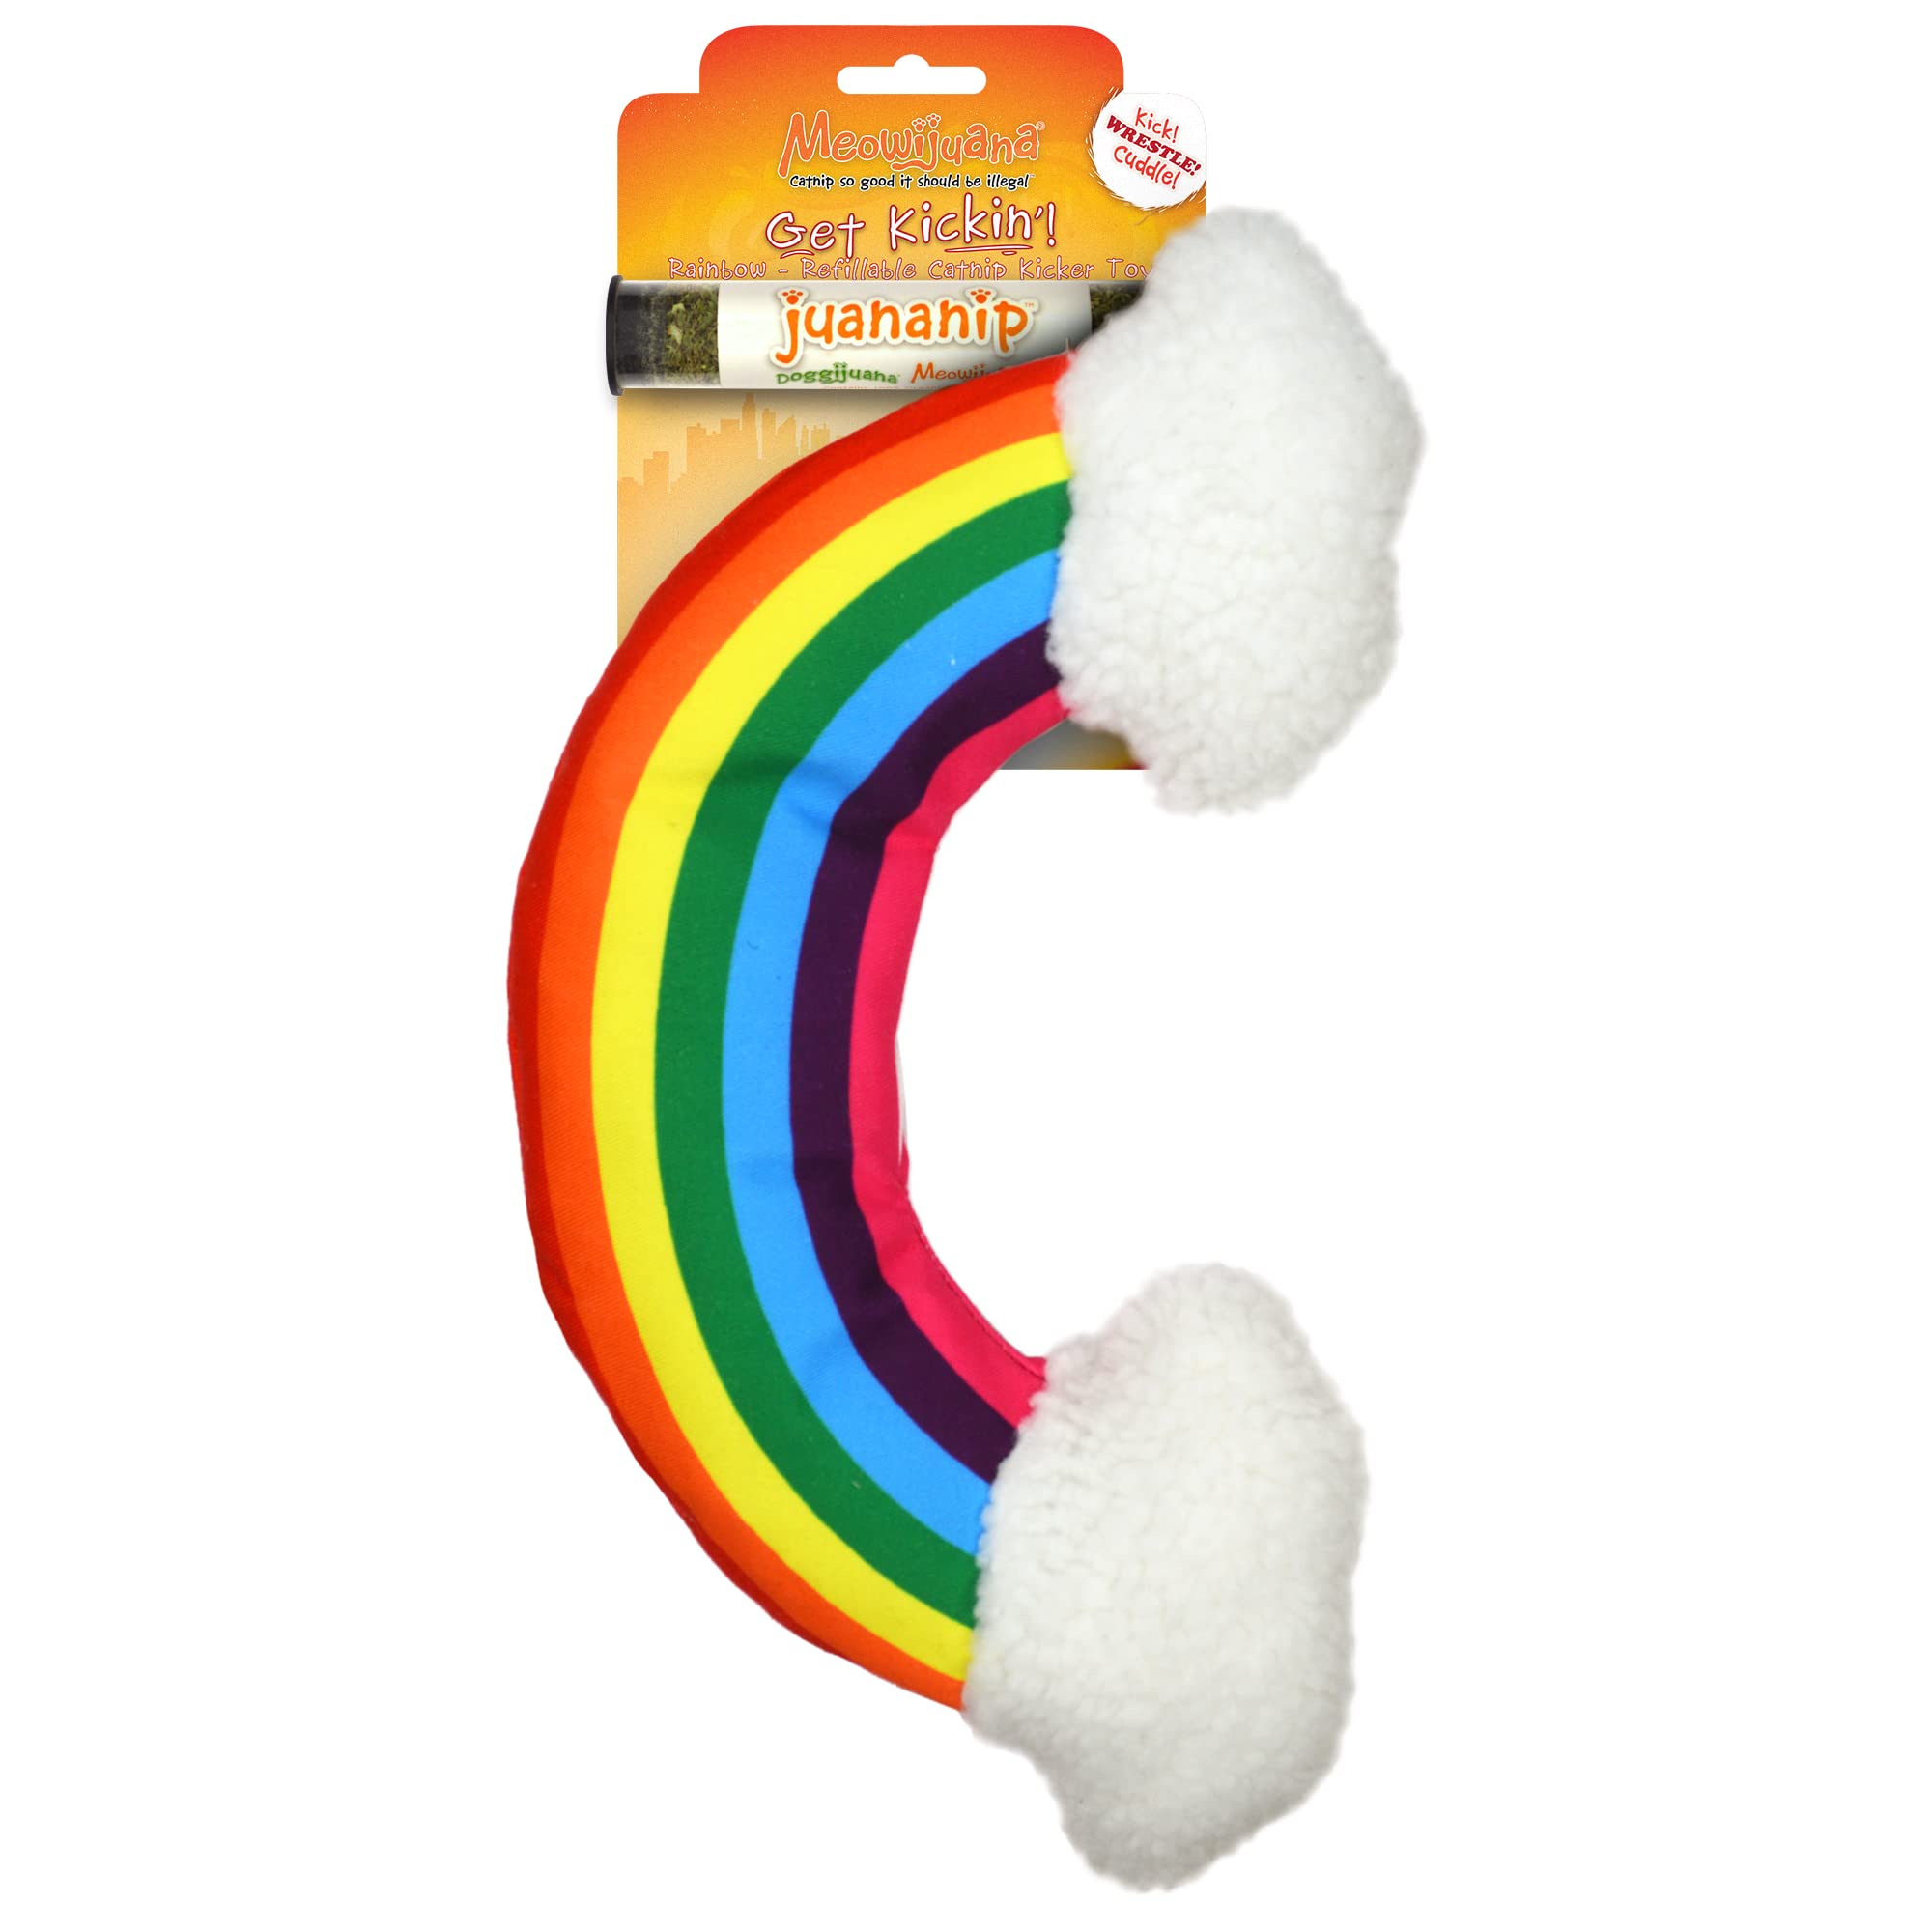 Meowijuana | Rainbow Bundle | Get Kickin' Refillable Rainbow Toy and Cloud 9 Catnip Blend | Promotes Play and Cat Health | Includes Organic Catnip